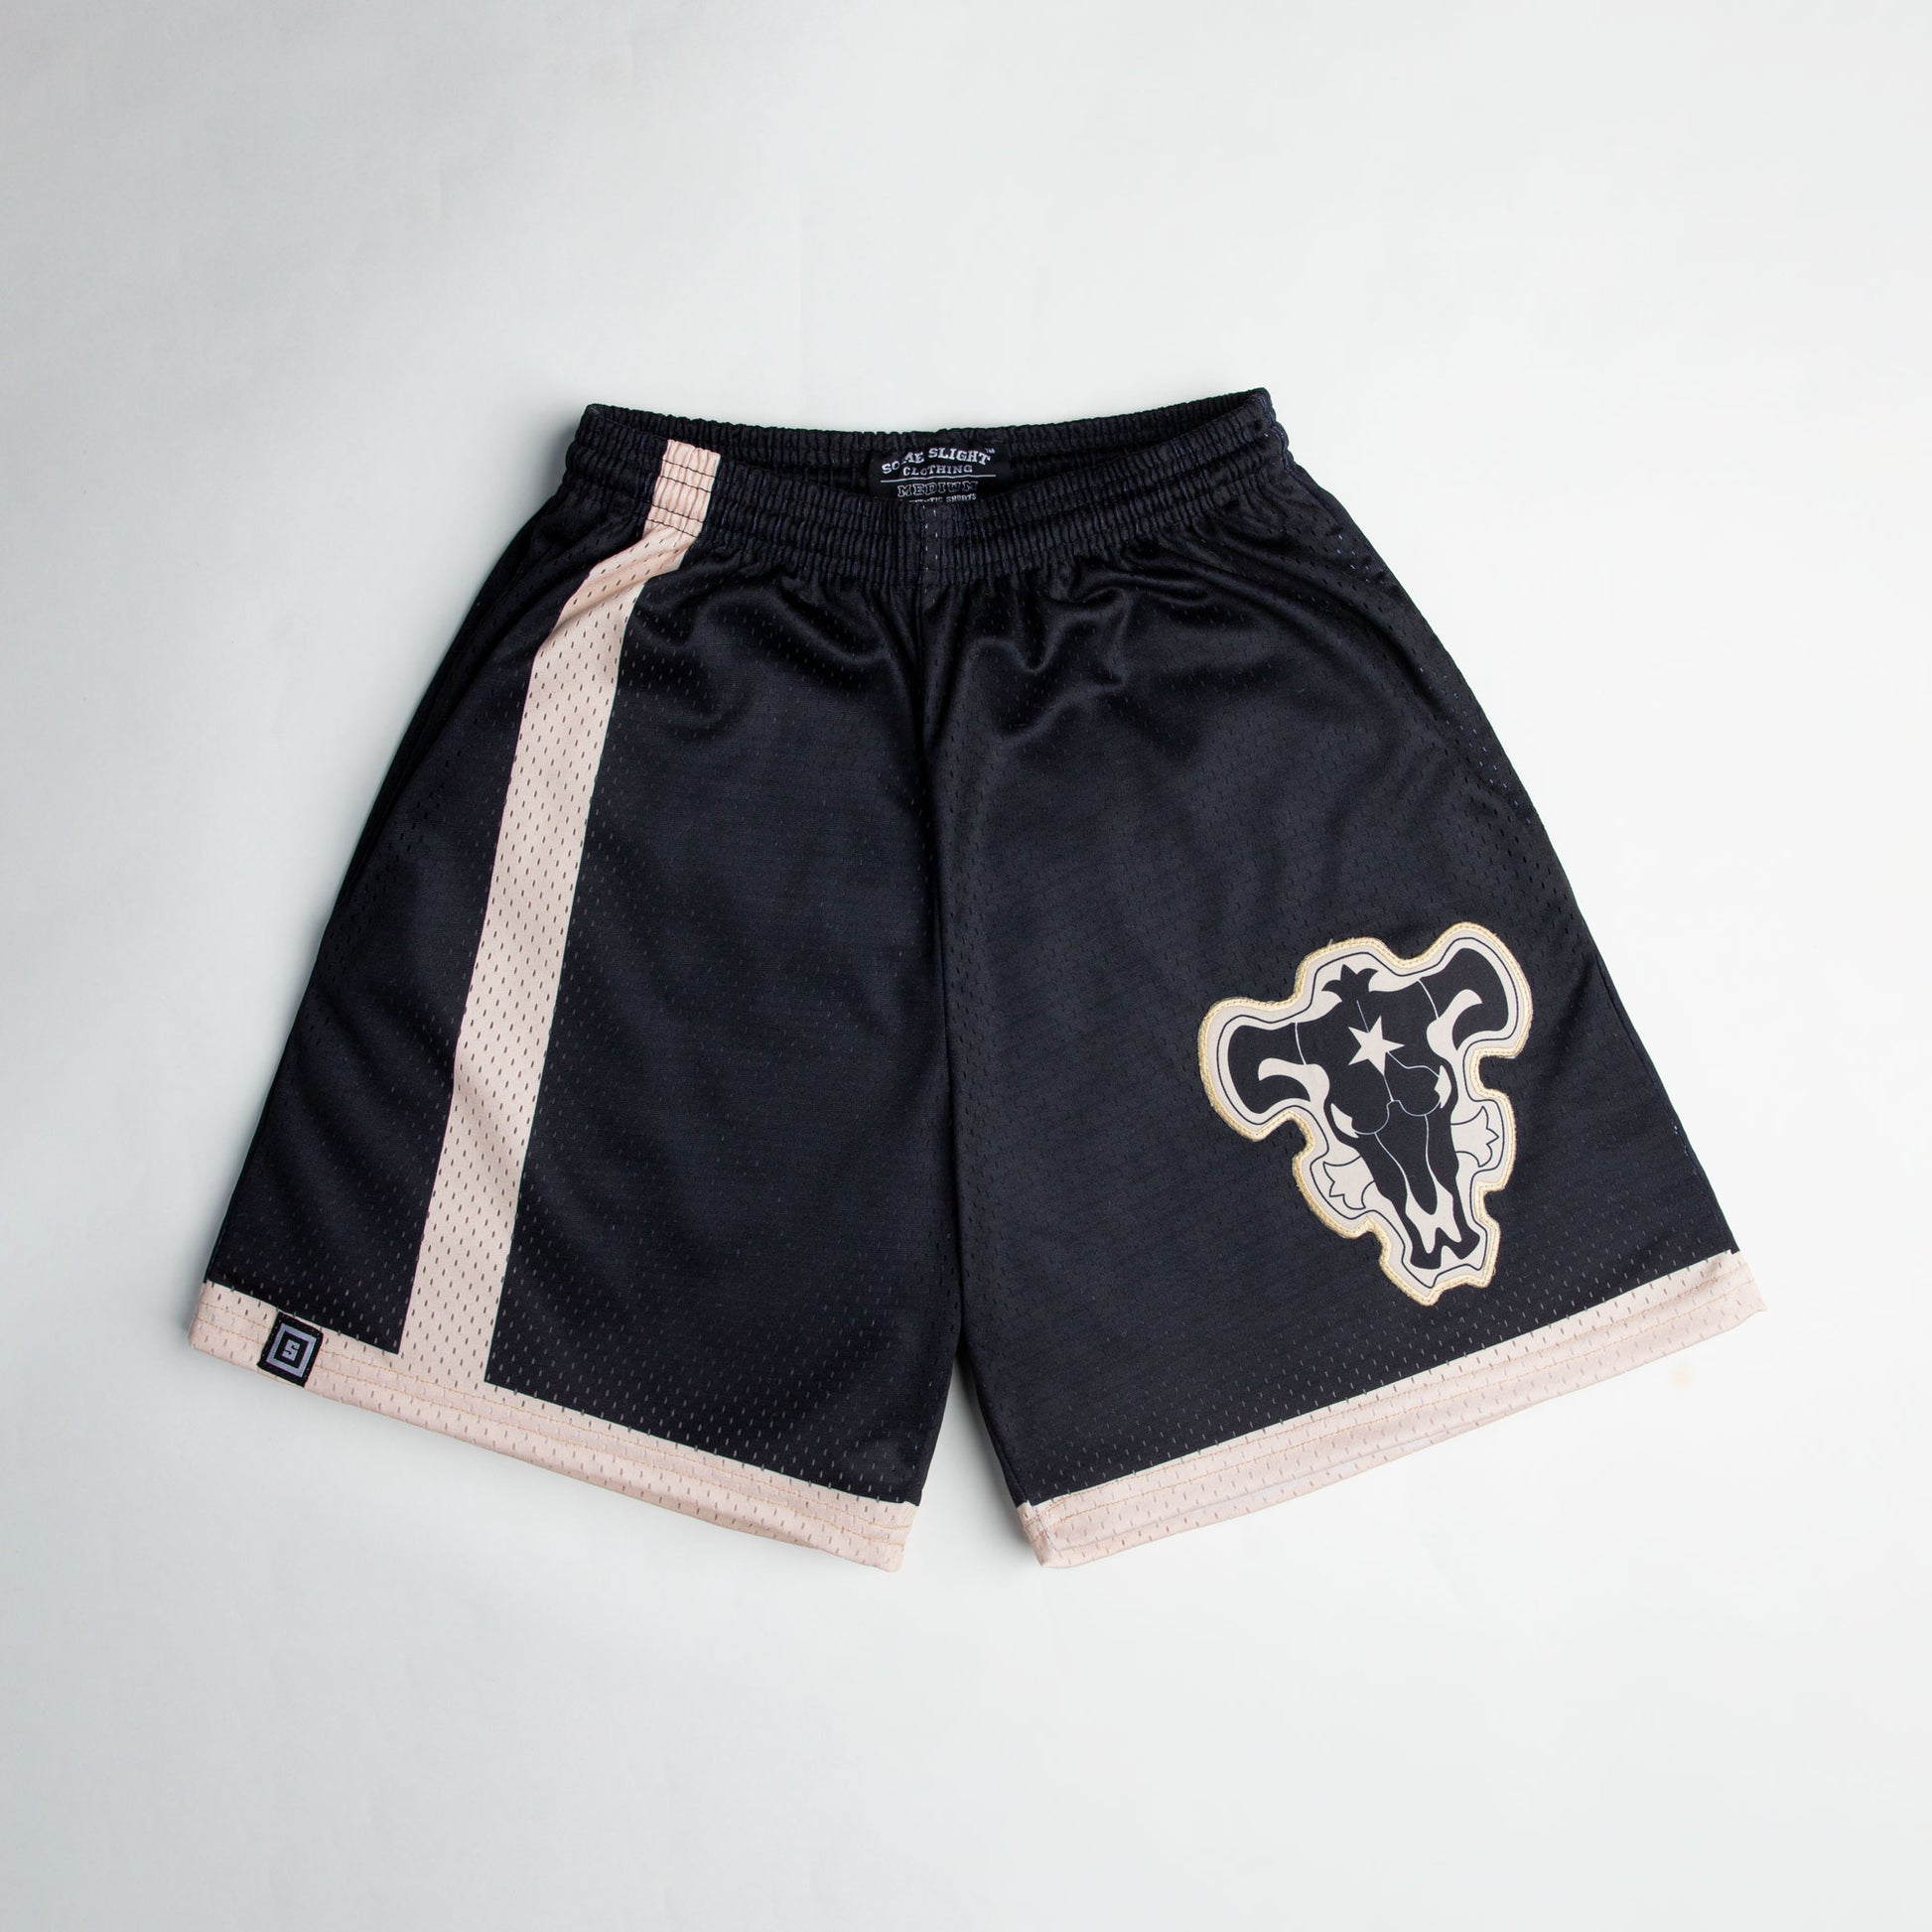 Pro Standard Chicago Bulls Black Mesh Shorts – Get Fly NYC